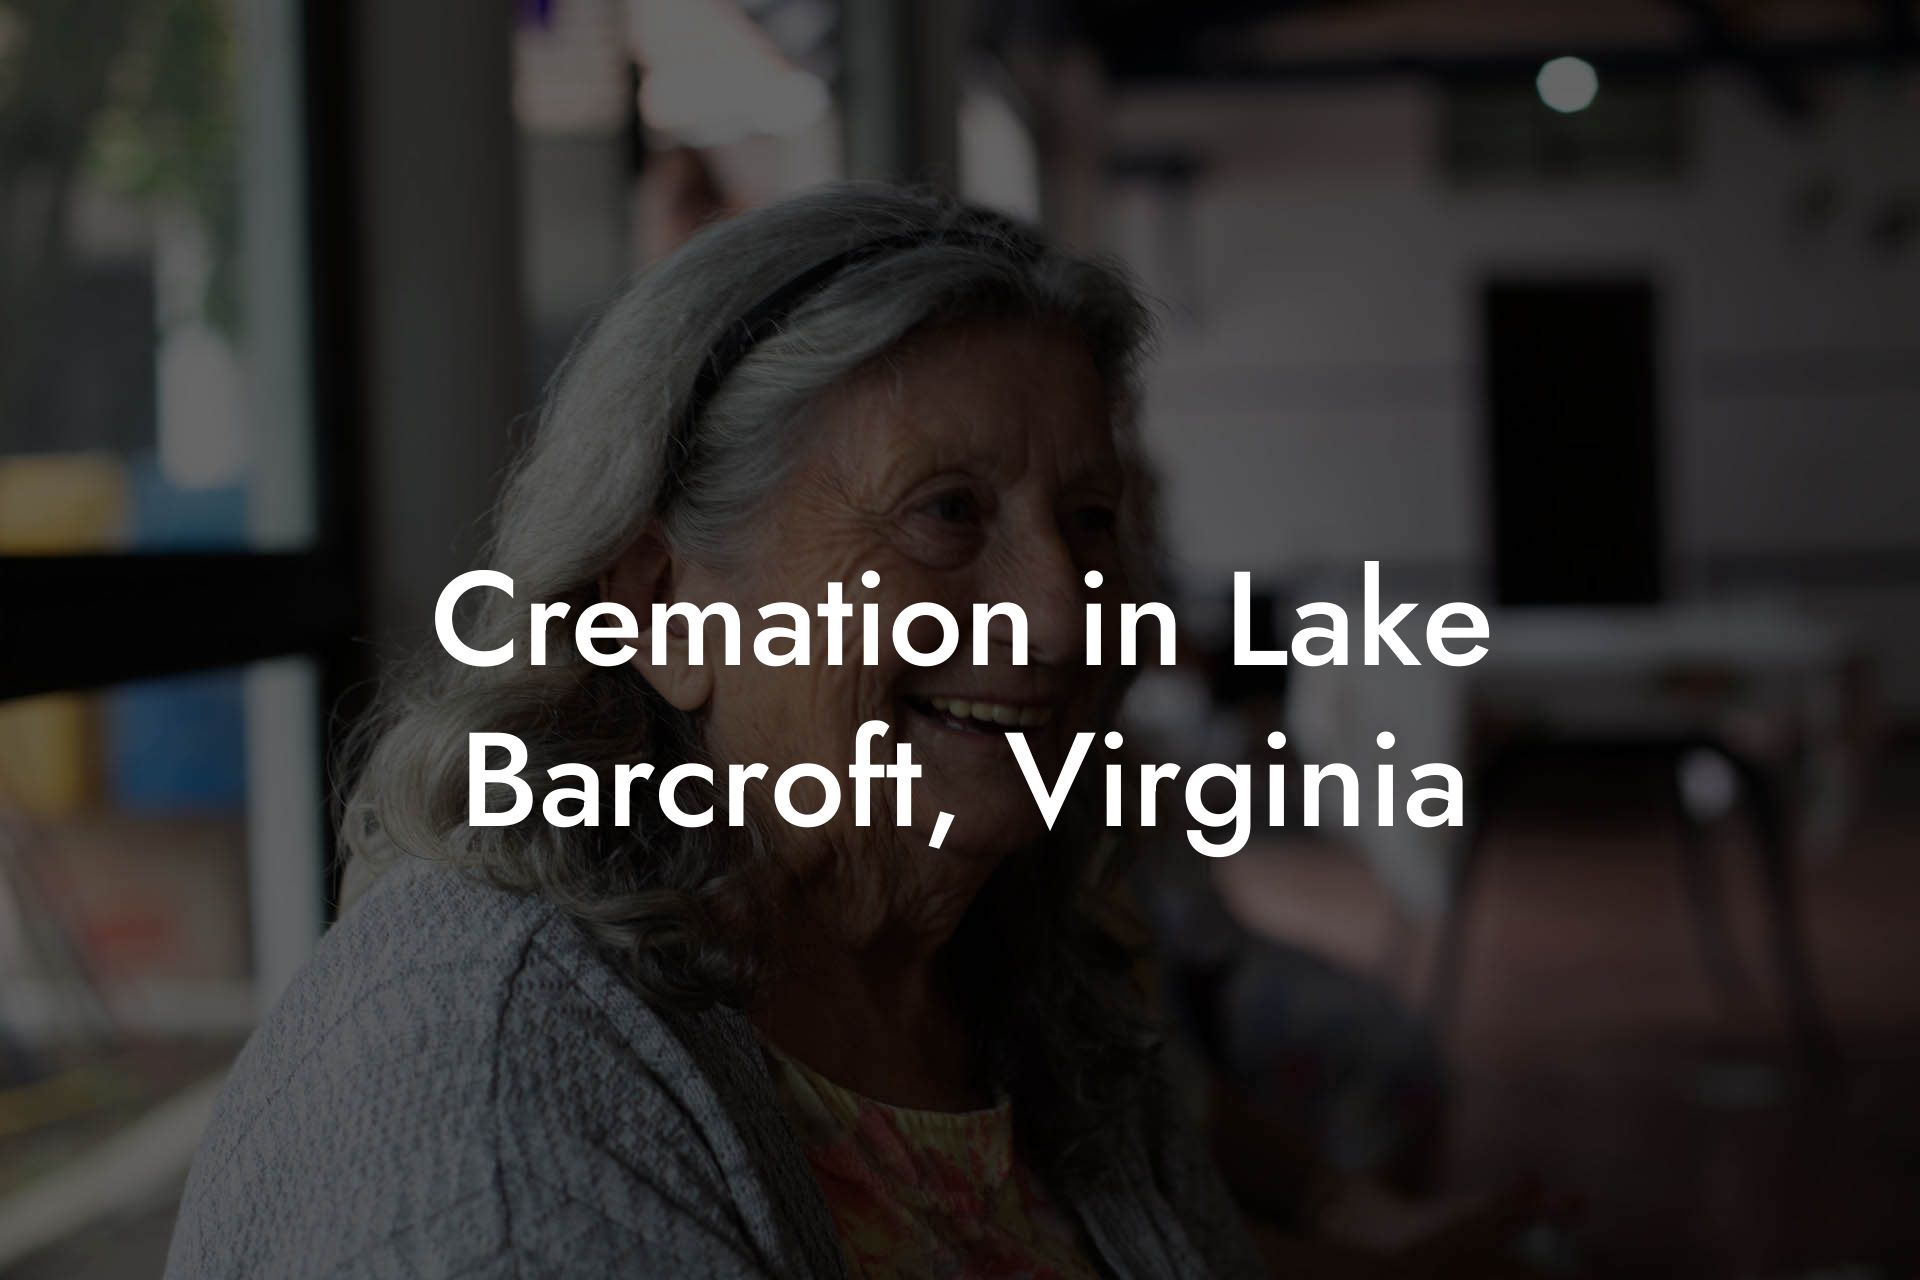 Cremation in Lake Barcroft, Virginia